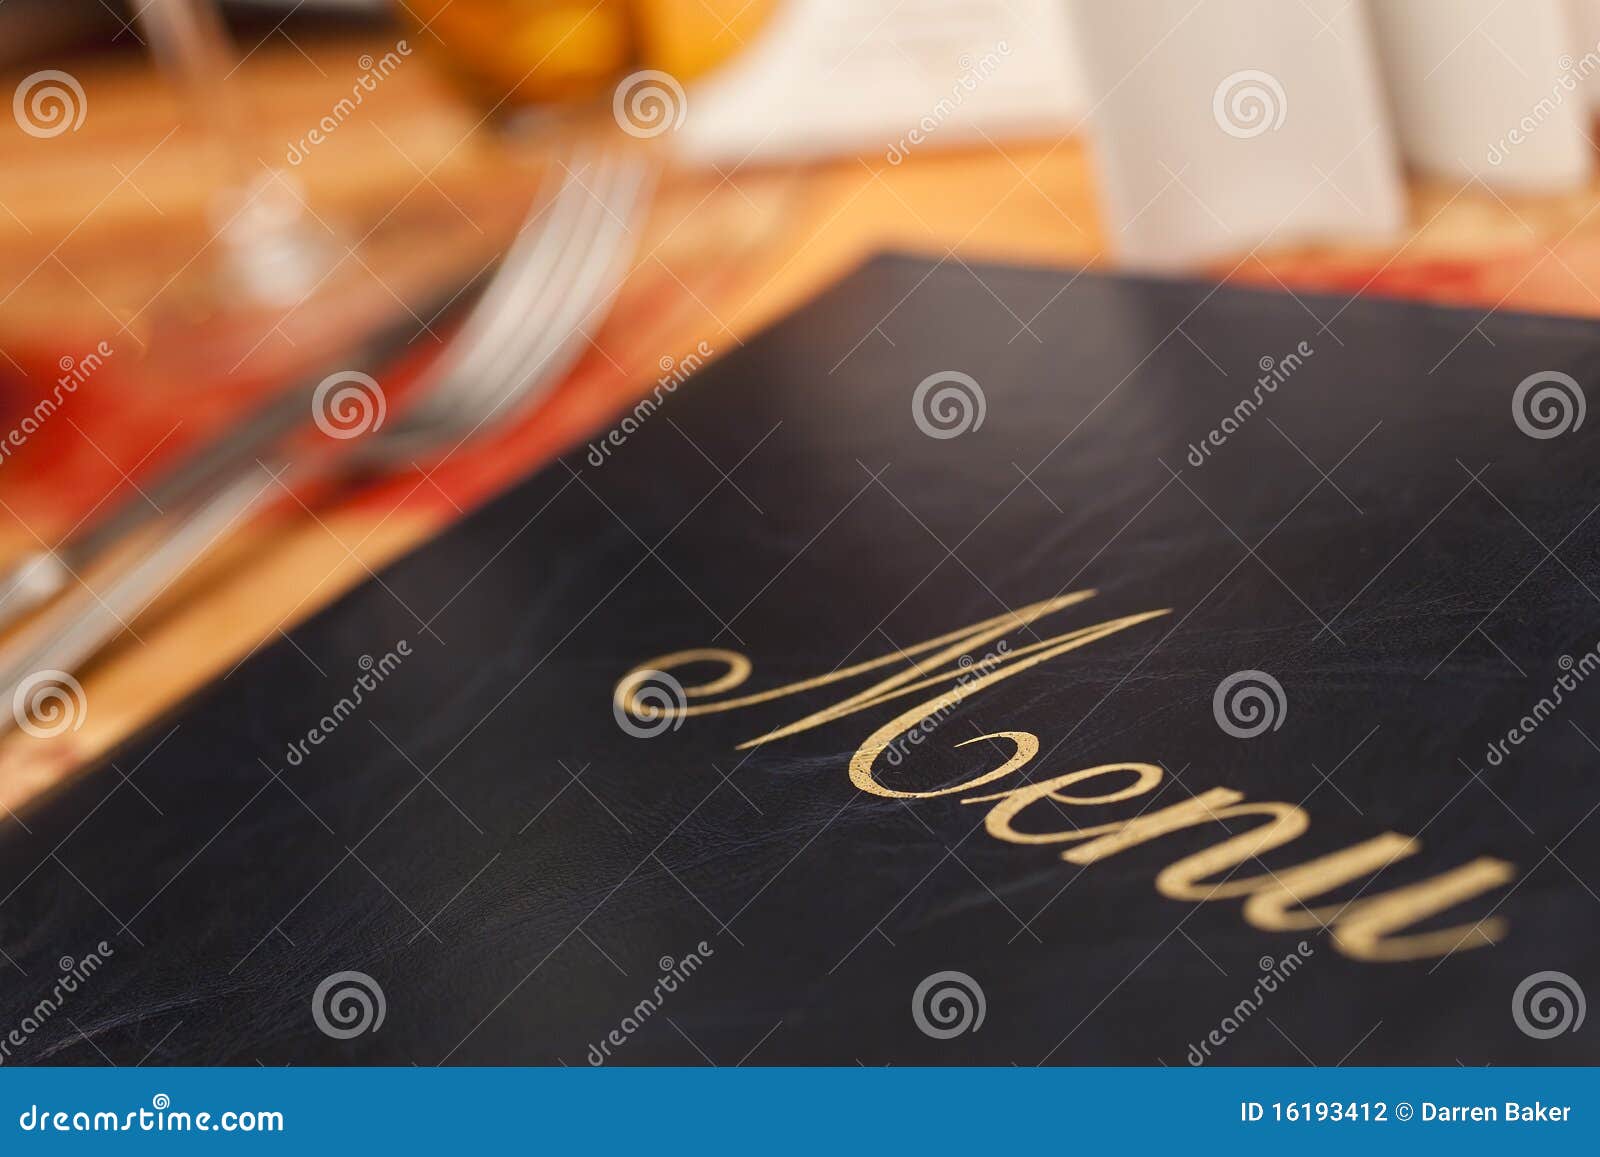 menu & cutlery on a restaurant table